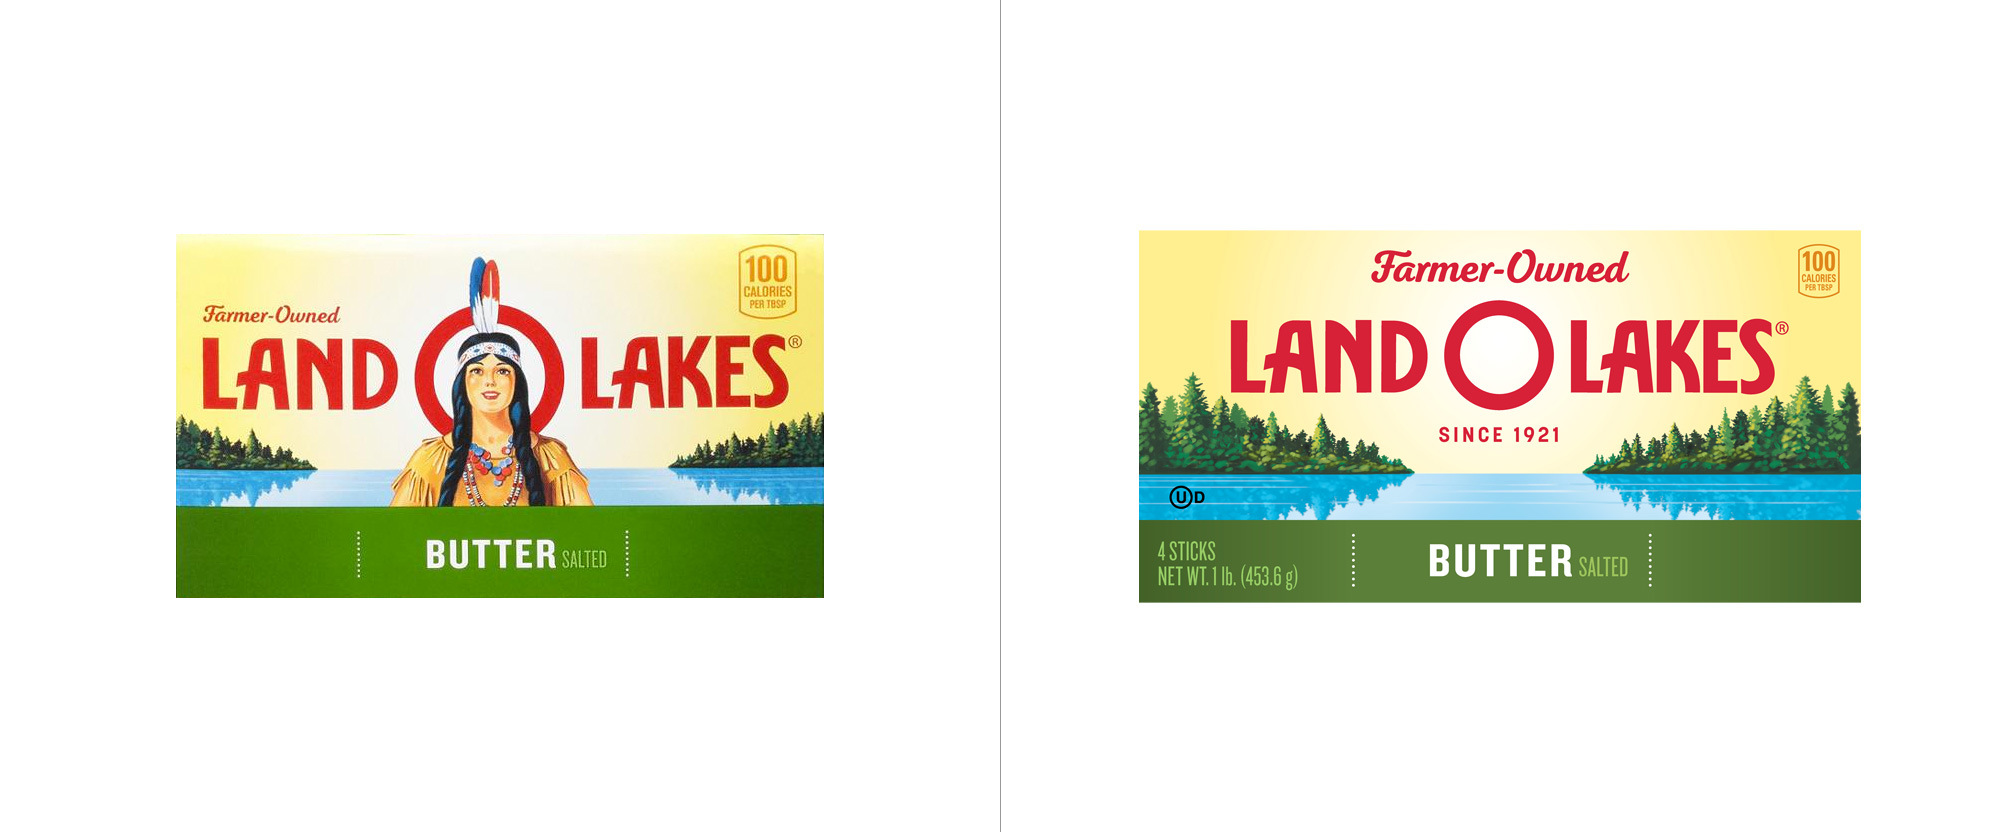 More Lake for Land O’Lakes